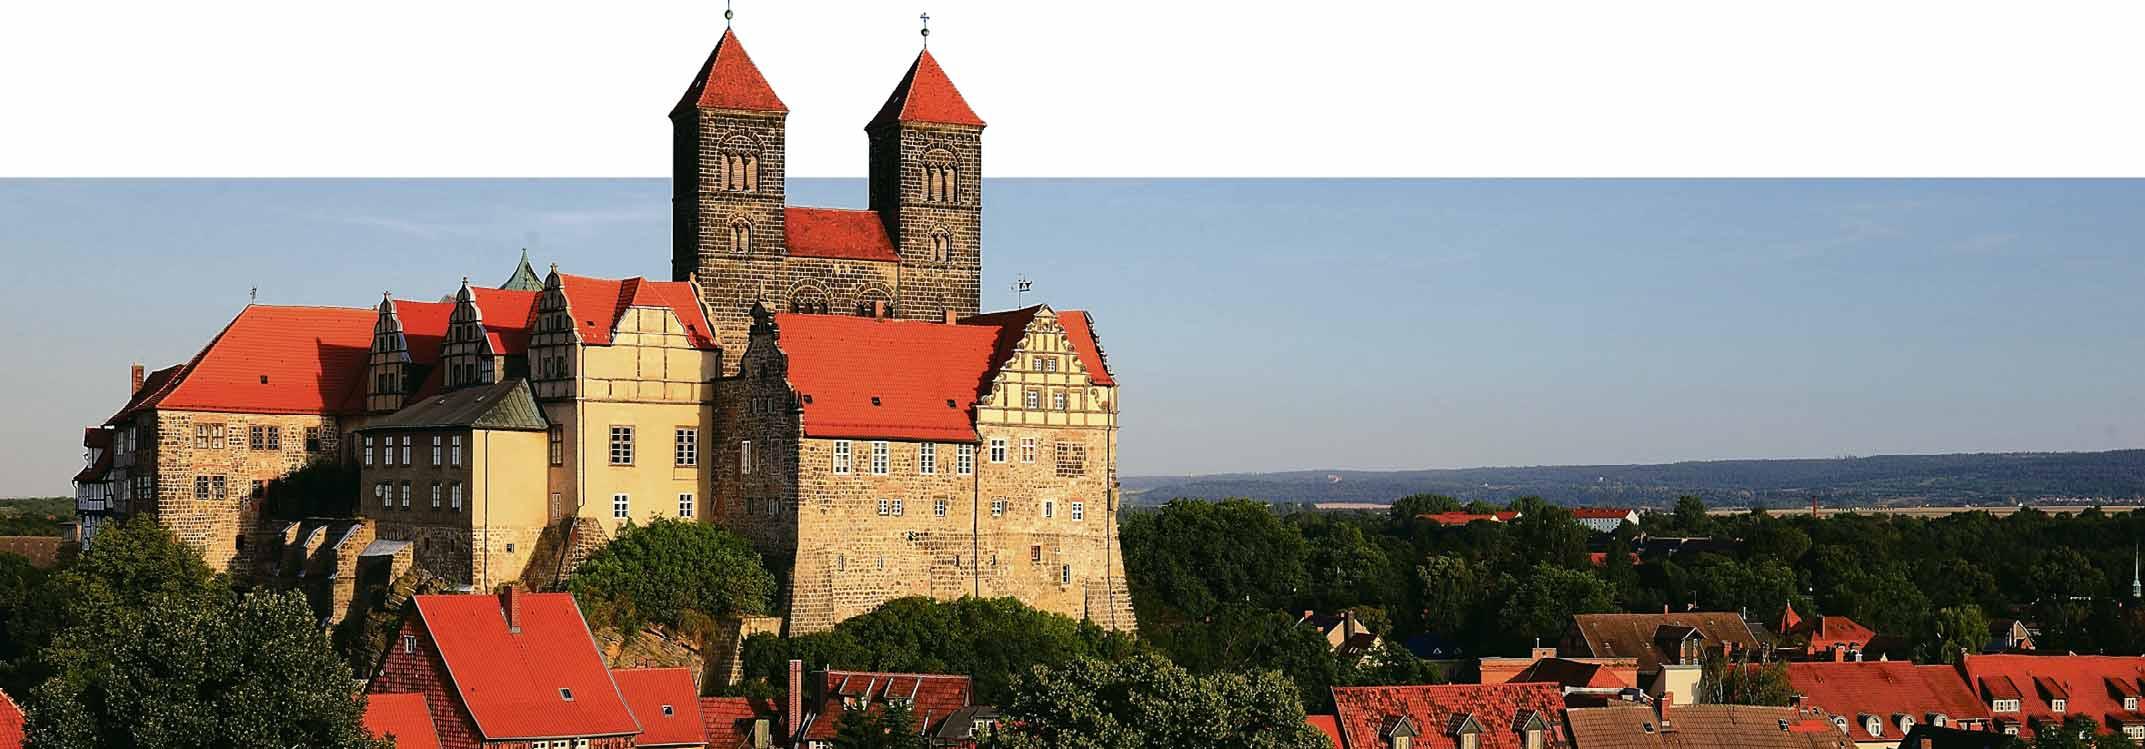 Quedlinburg feiert das Welterbe-2